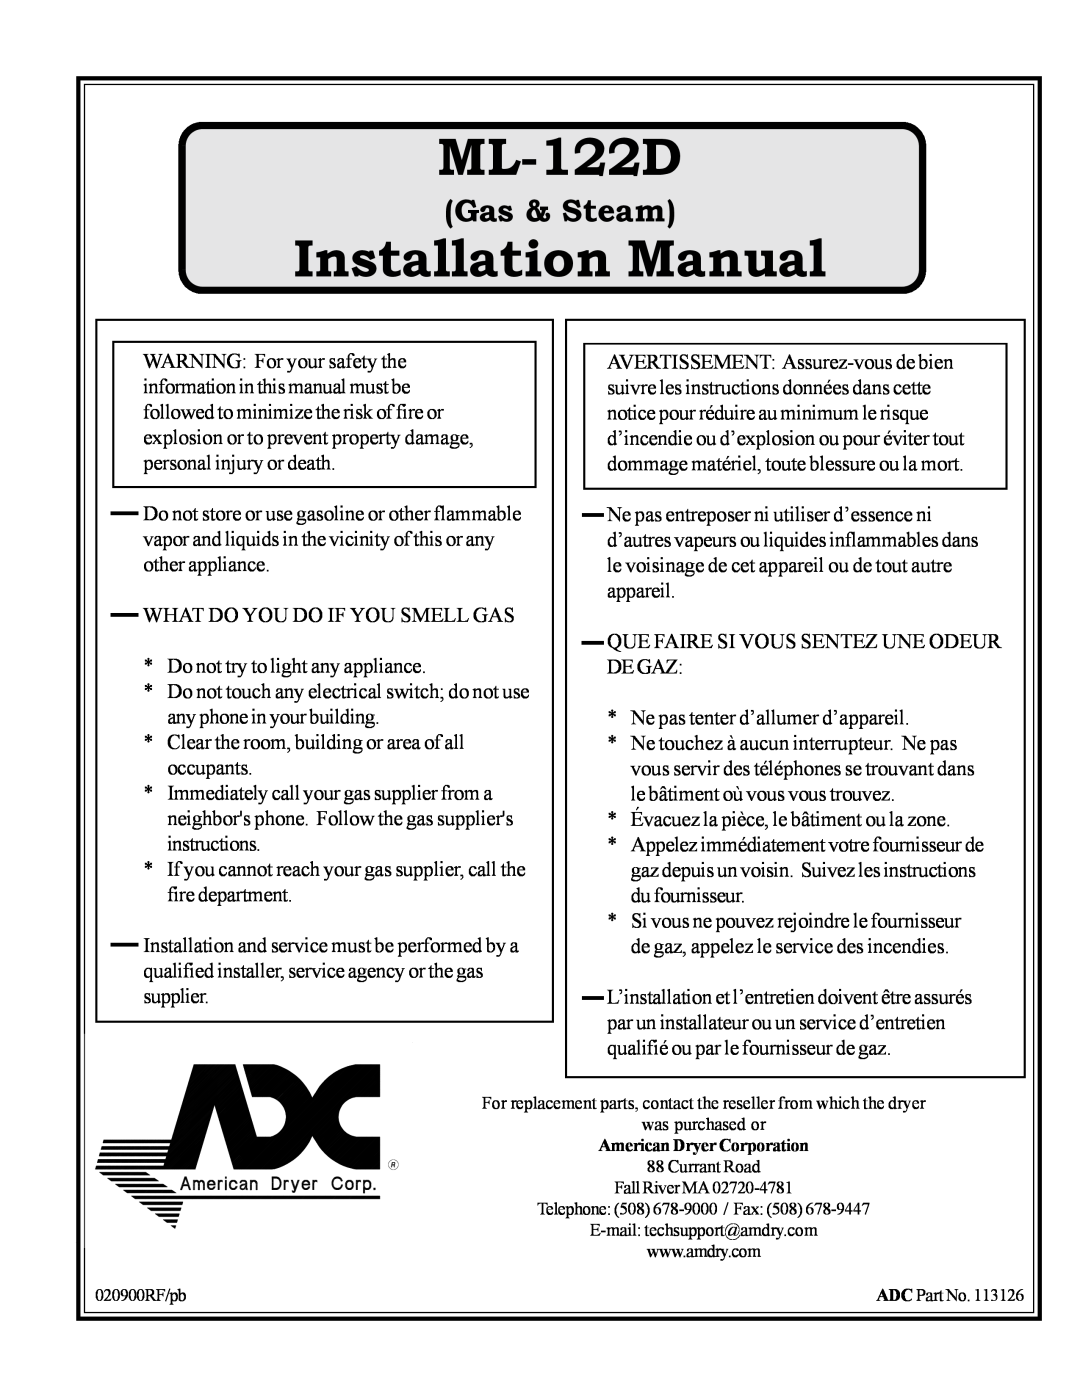 American Dryer Corp ML-122D installation manual Installation Manual, Gas & Steam 